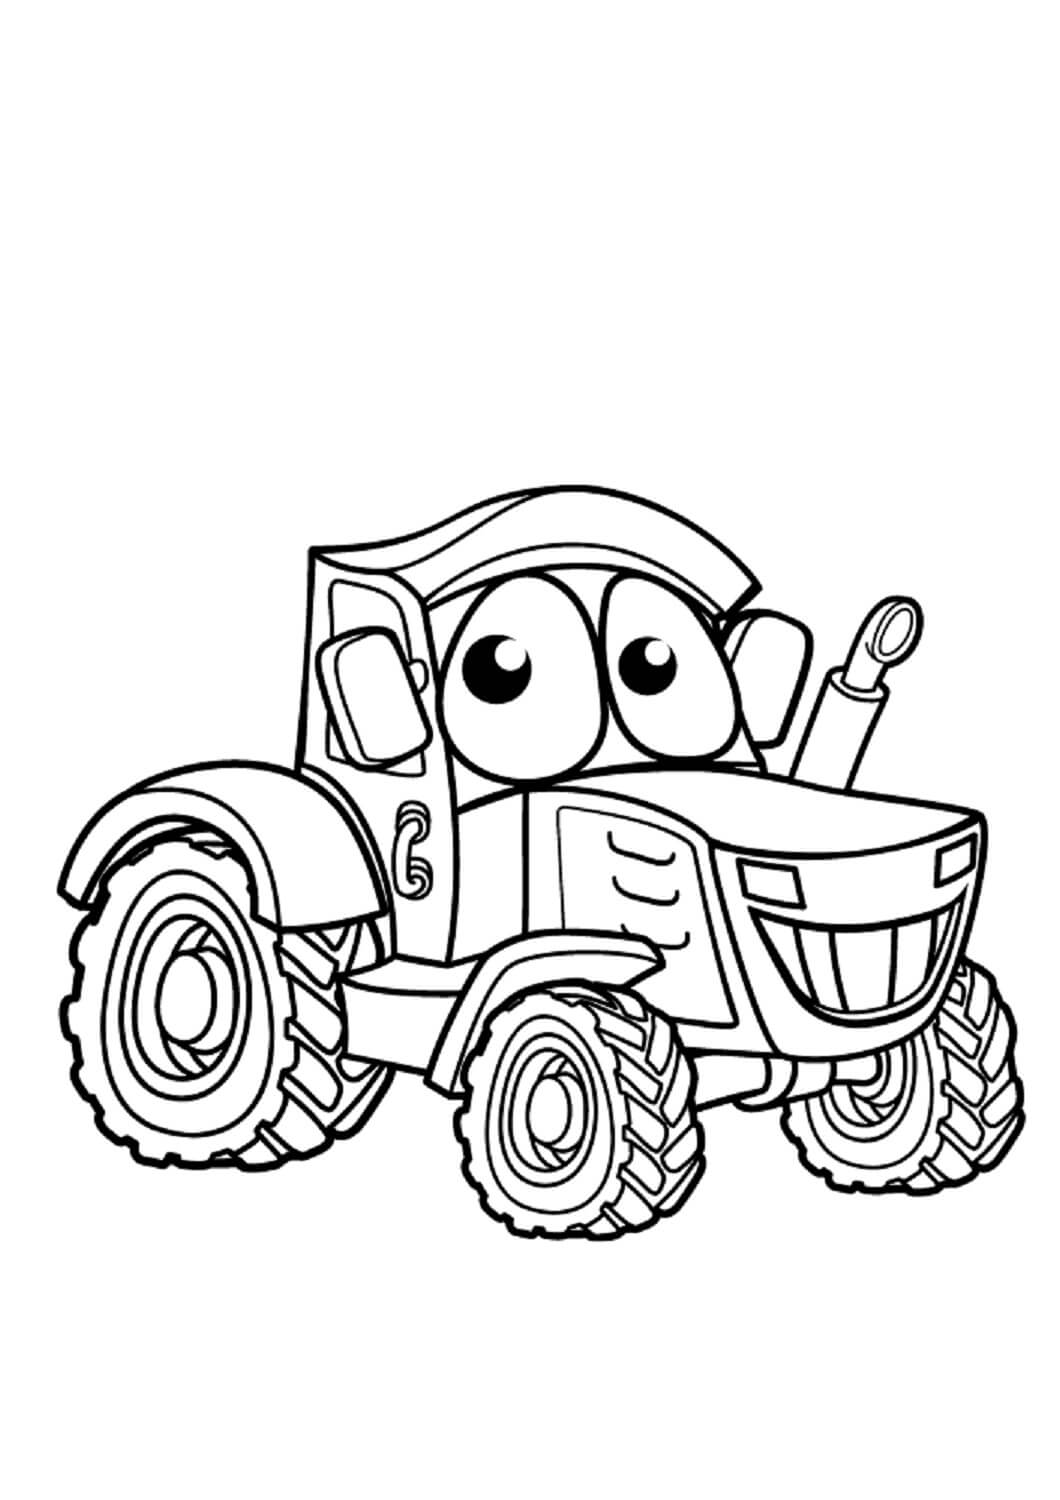 Koe boerderij en tractor